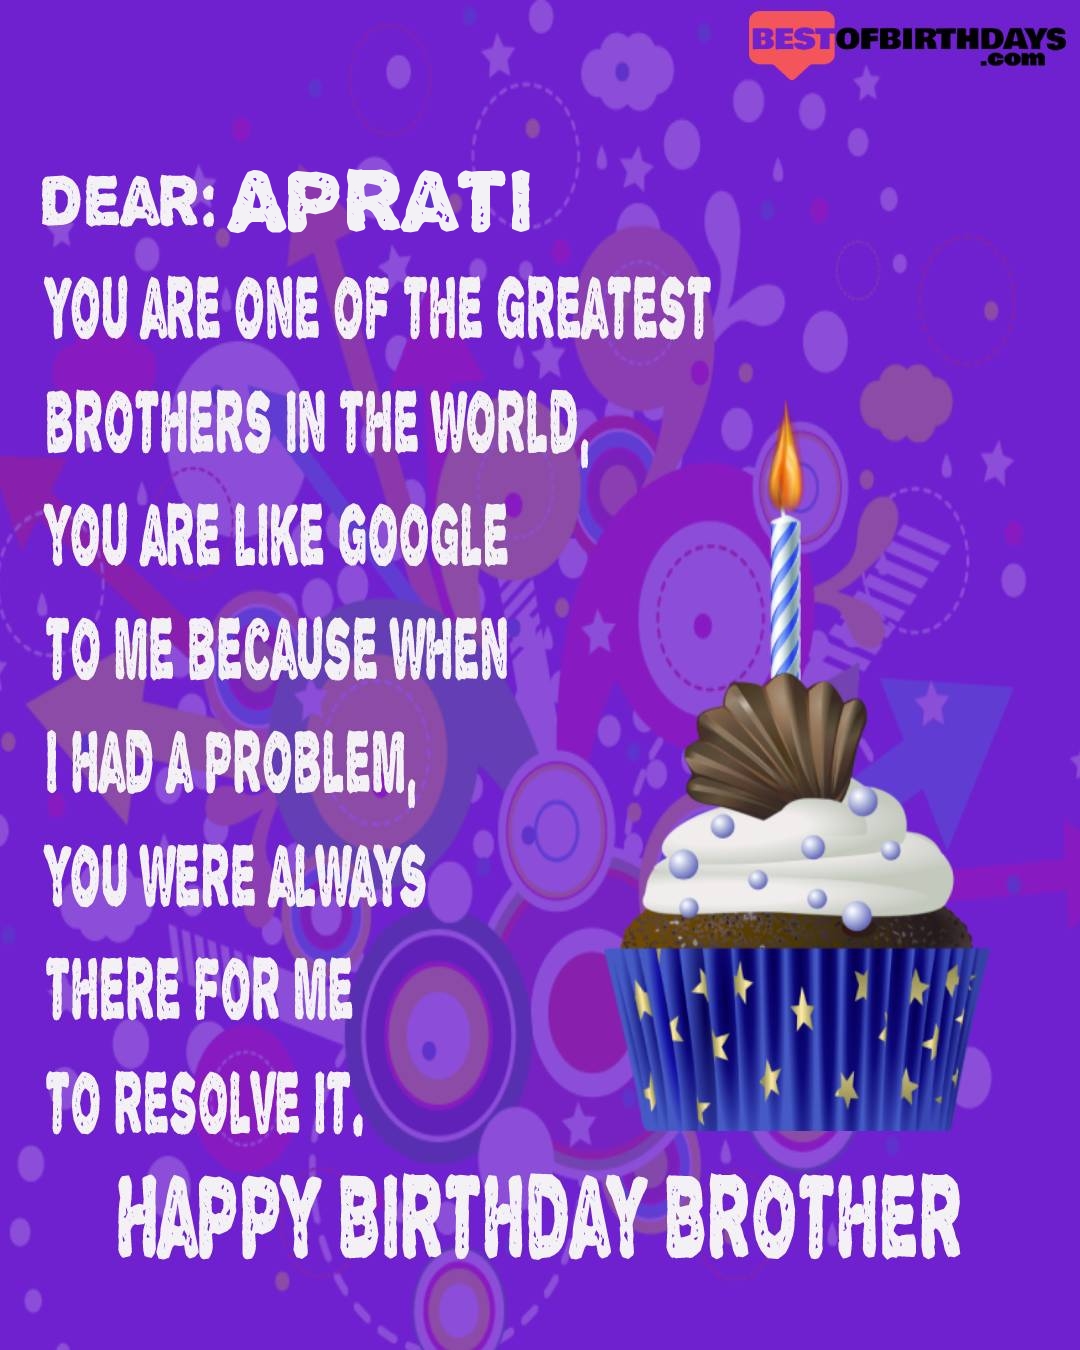 Happy birthday aprati bhai brother bro